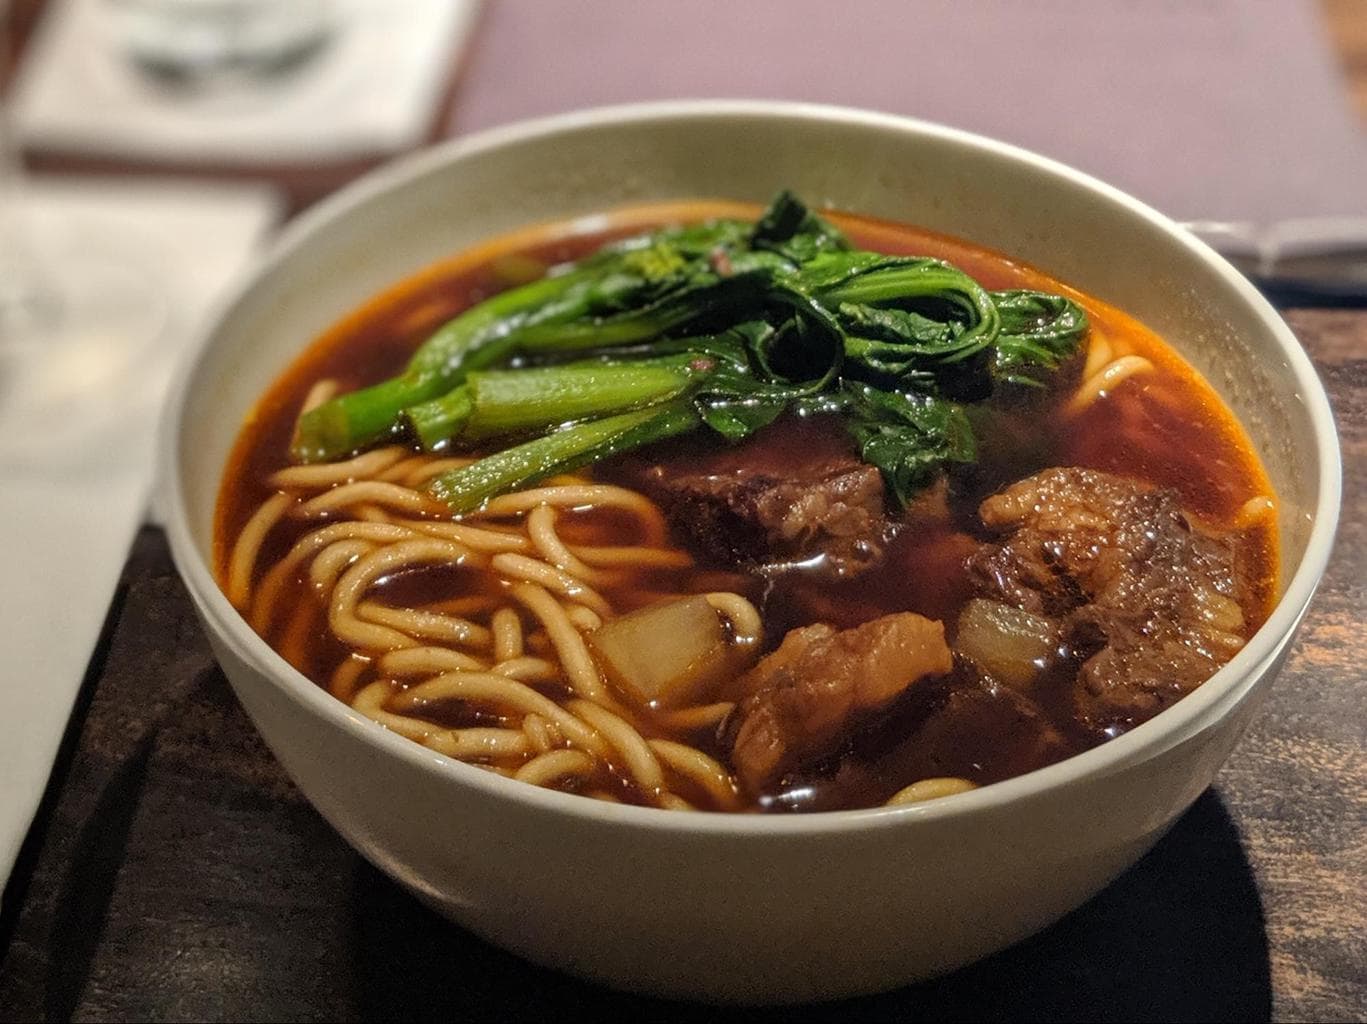 Shanghai beef noodles